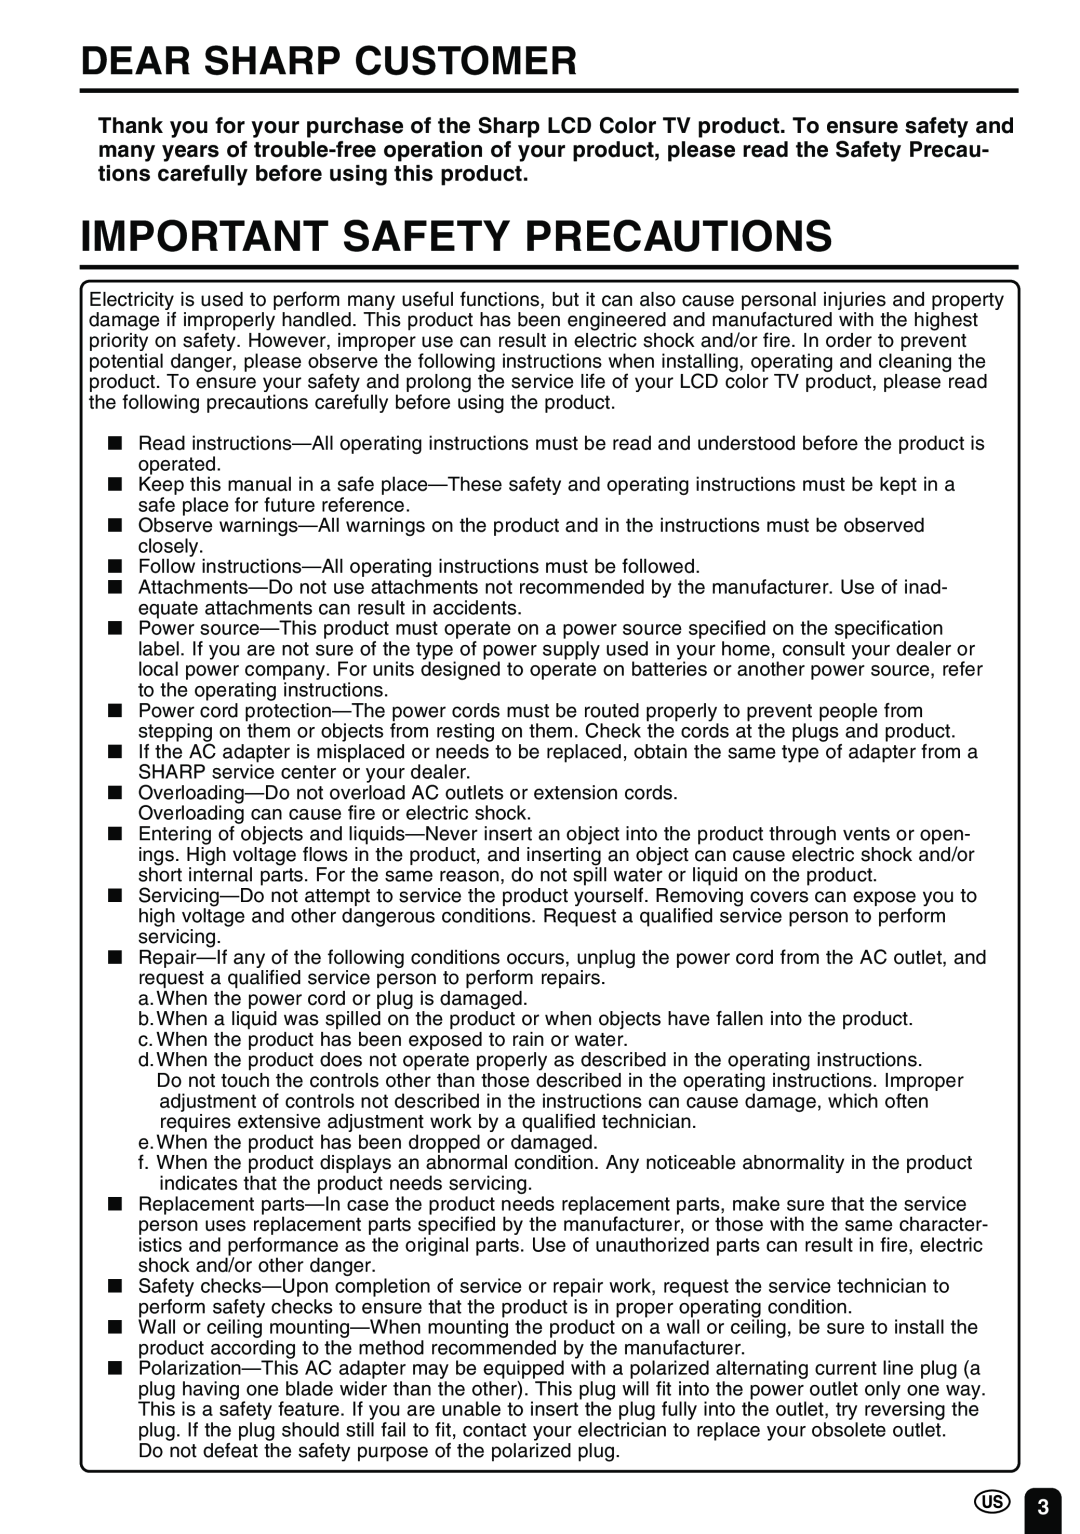 Sharp LC-20B2UA operation manual Important Safety Precautions, Dear Sharp Customer 